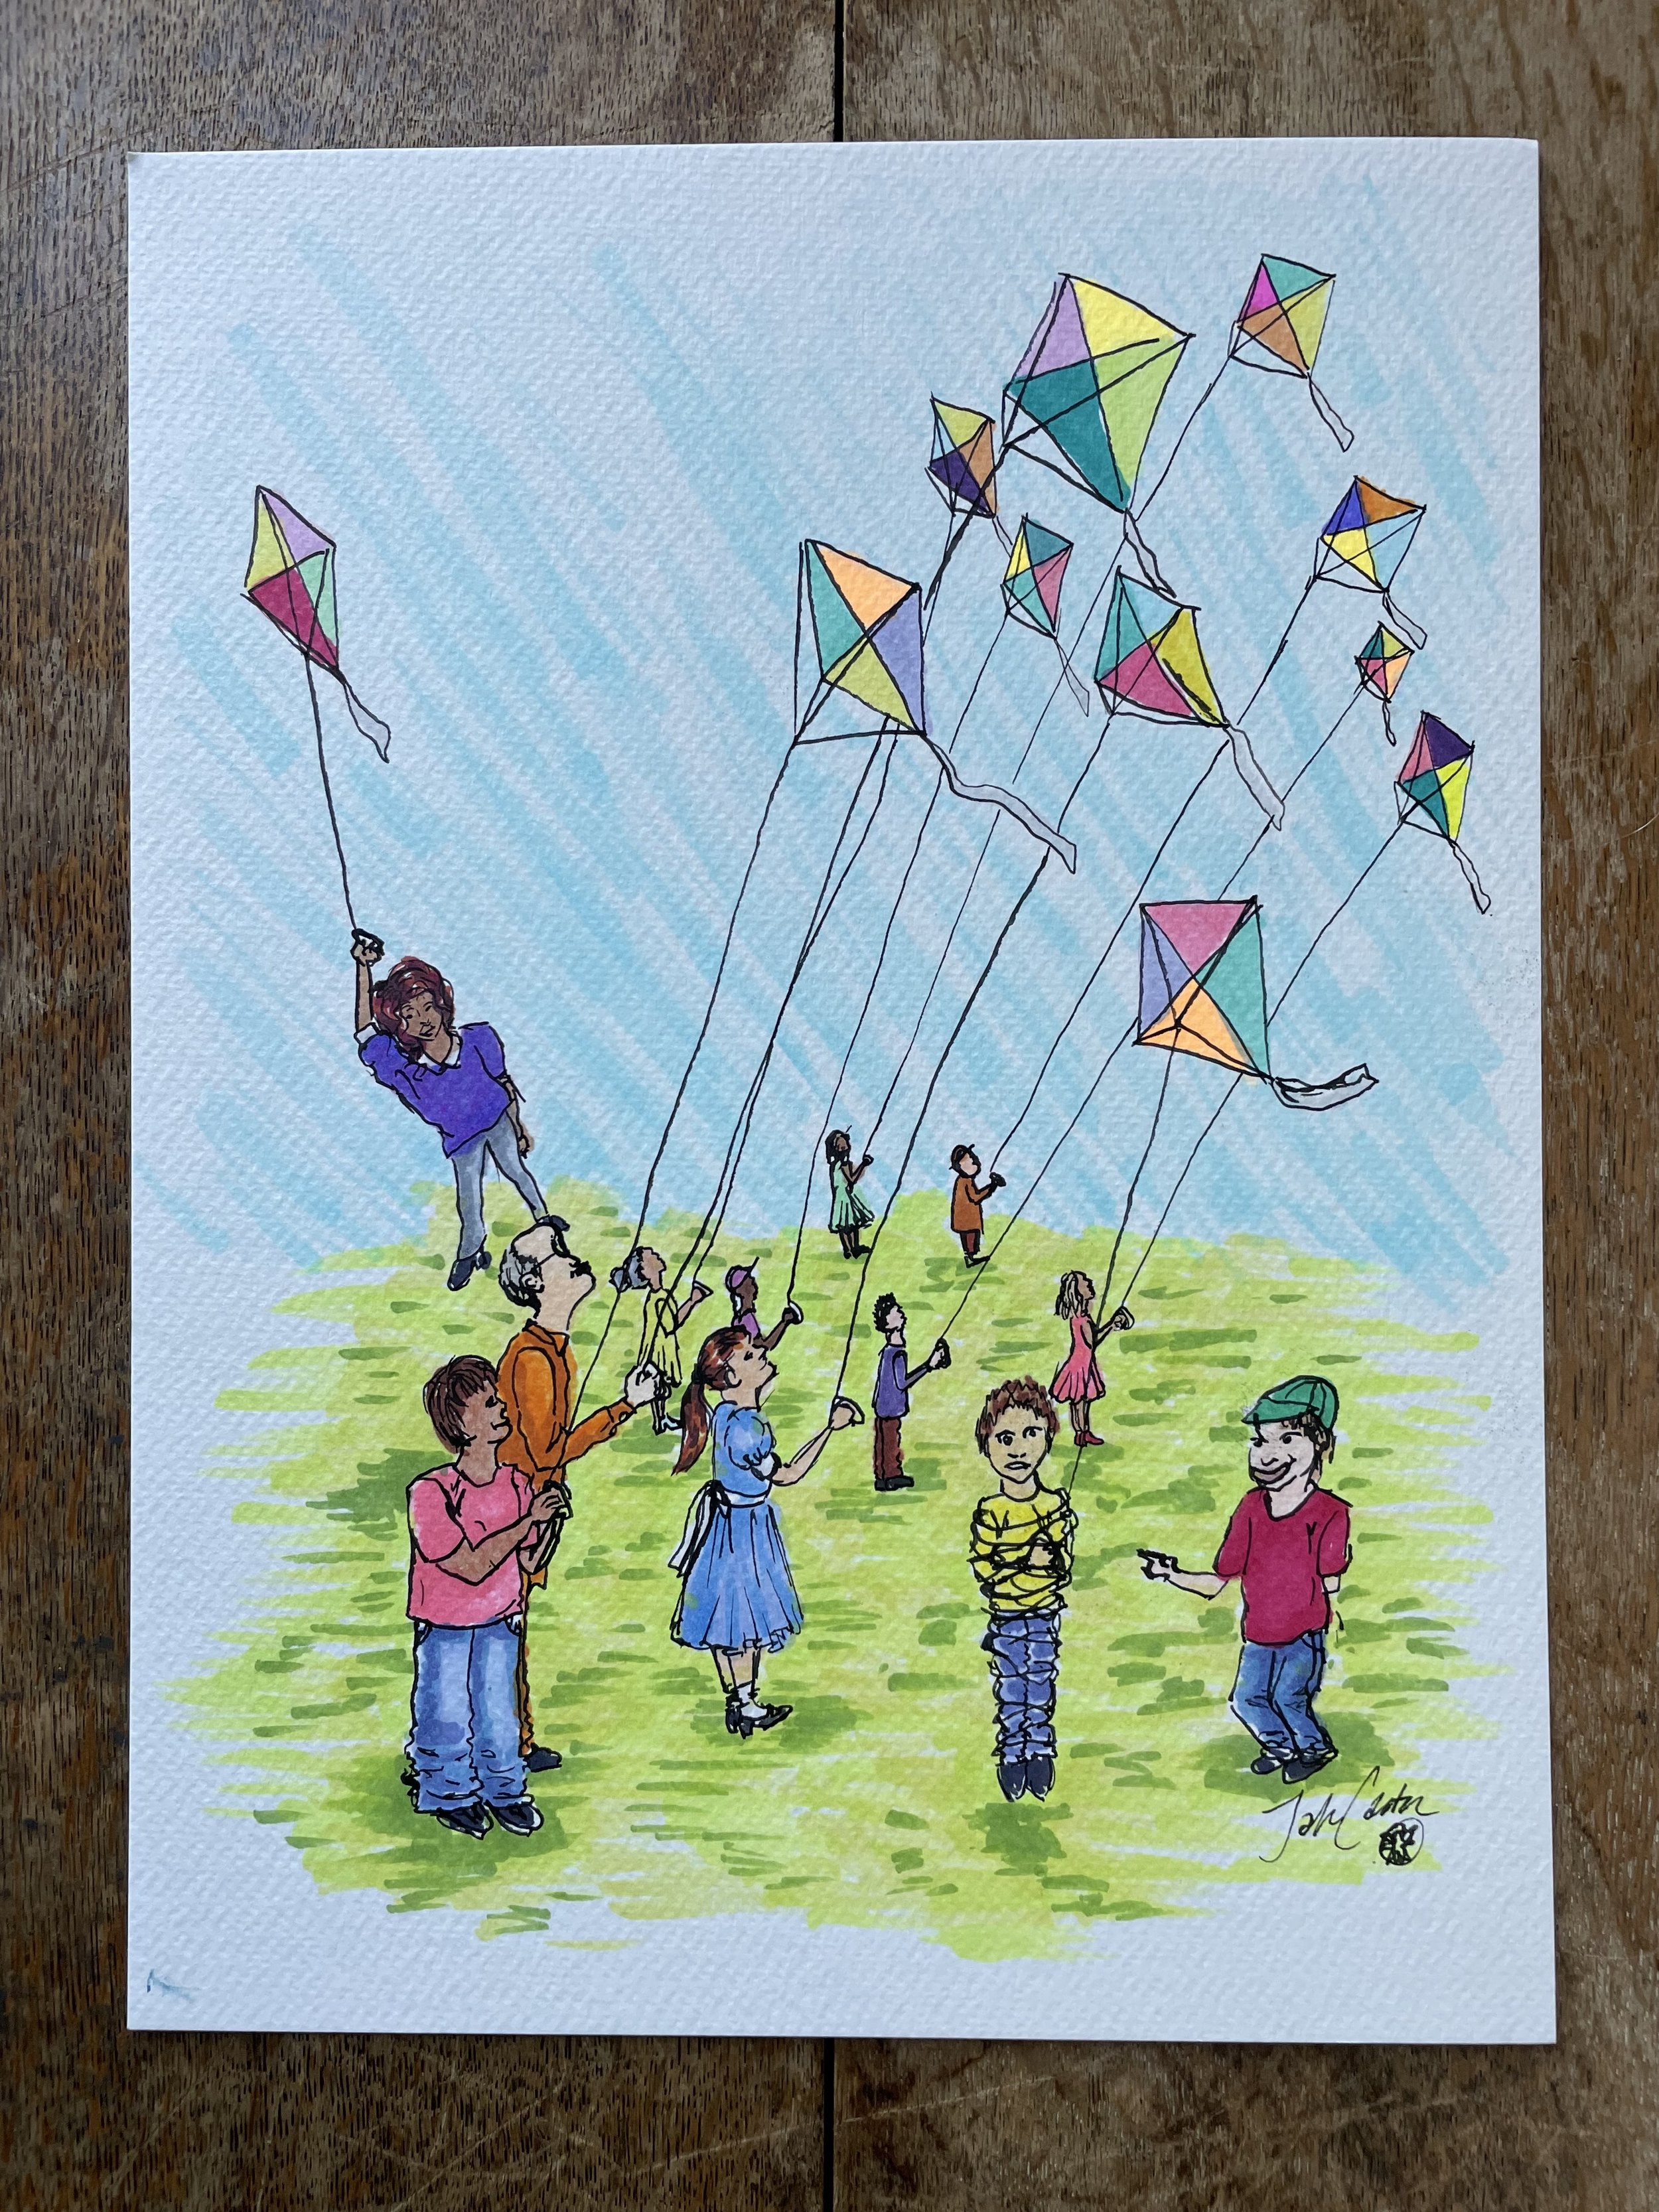 Kites Flying High